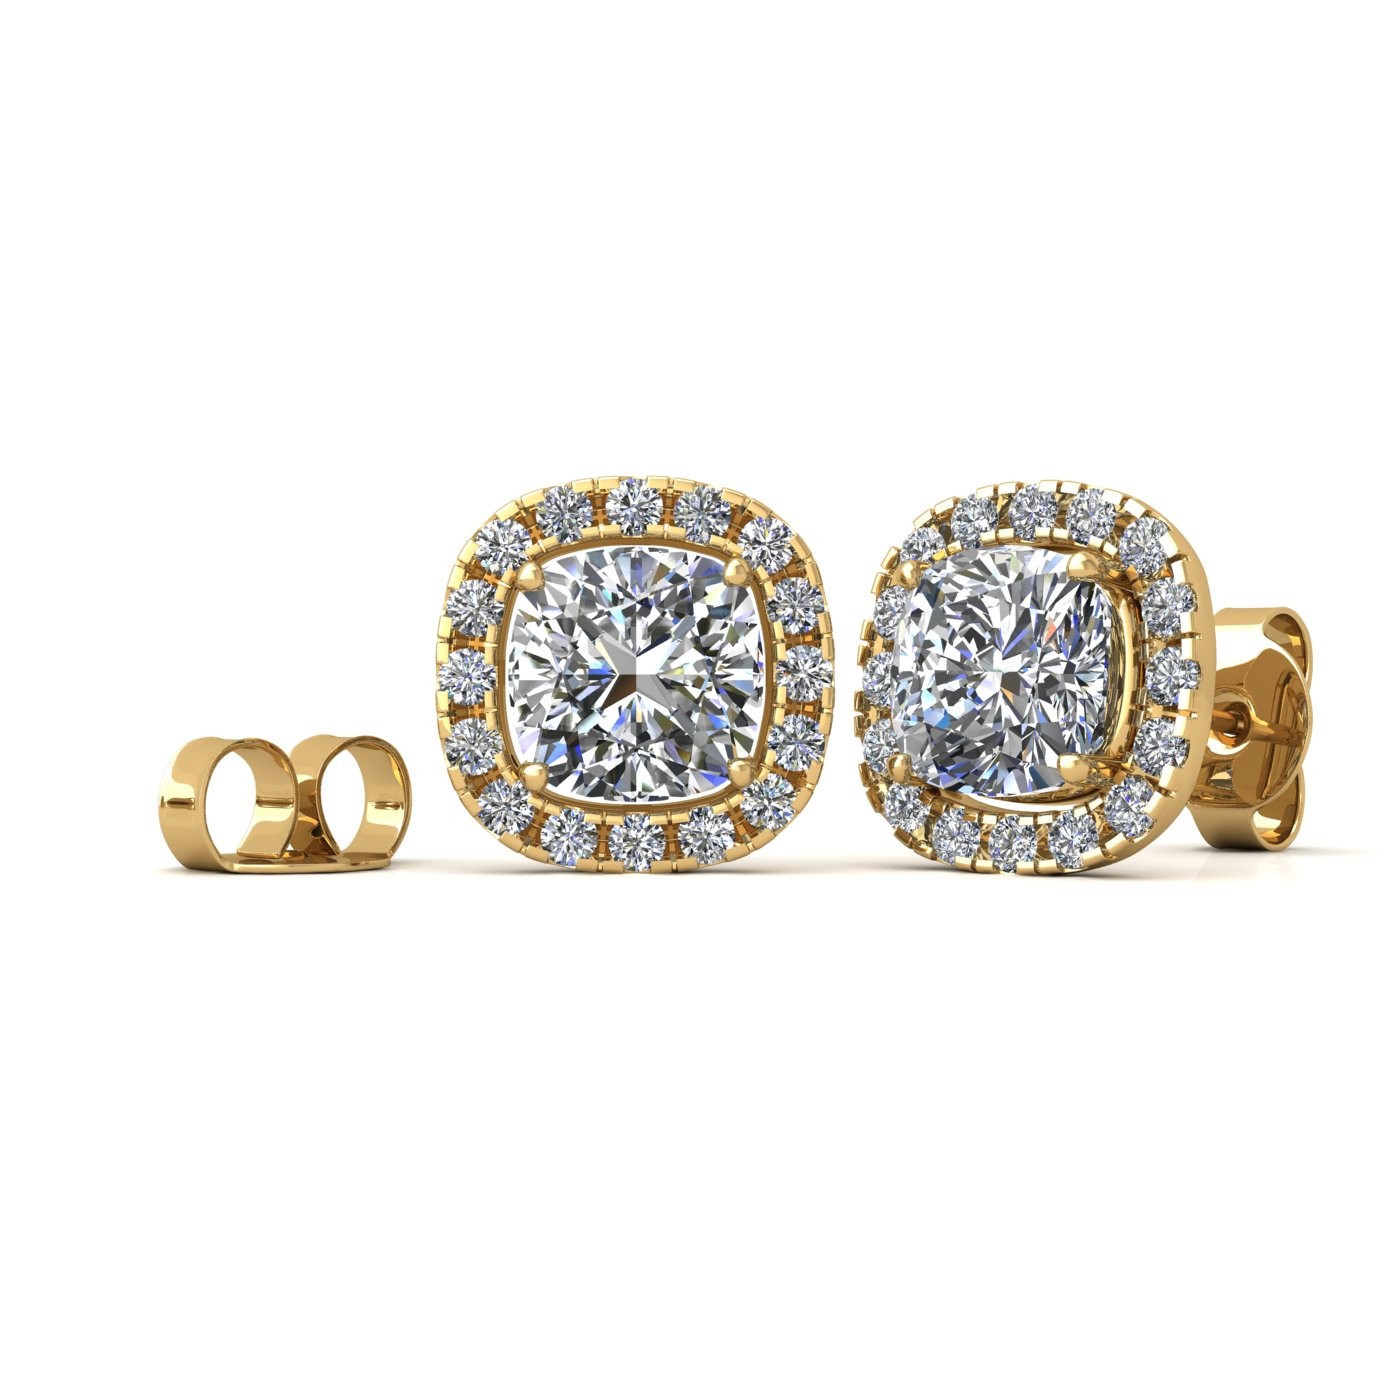 18k yellow gold  1,5 ct each (3,0 tcw) 4 prongs cushion shape diamond earrings with diamond pavÉ set halo Photos & images